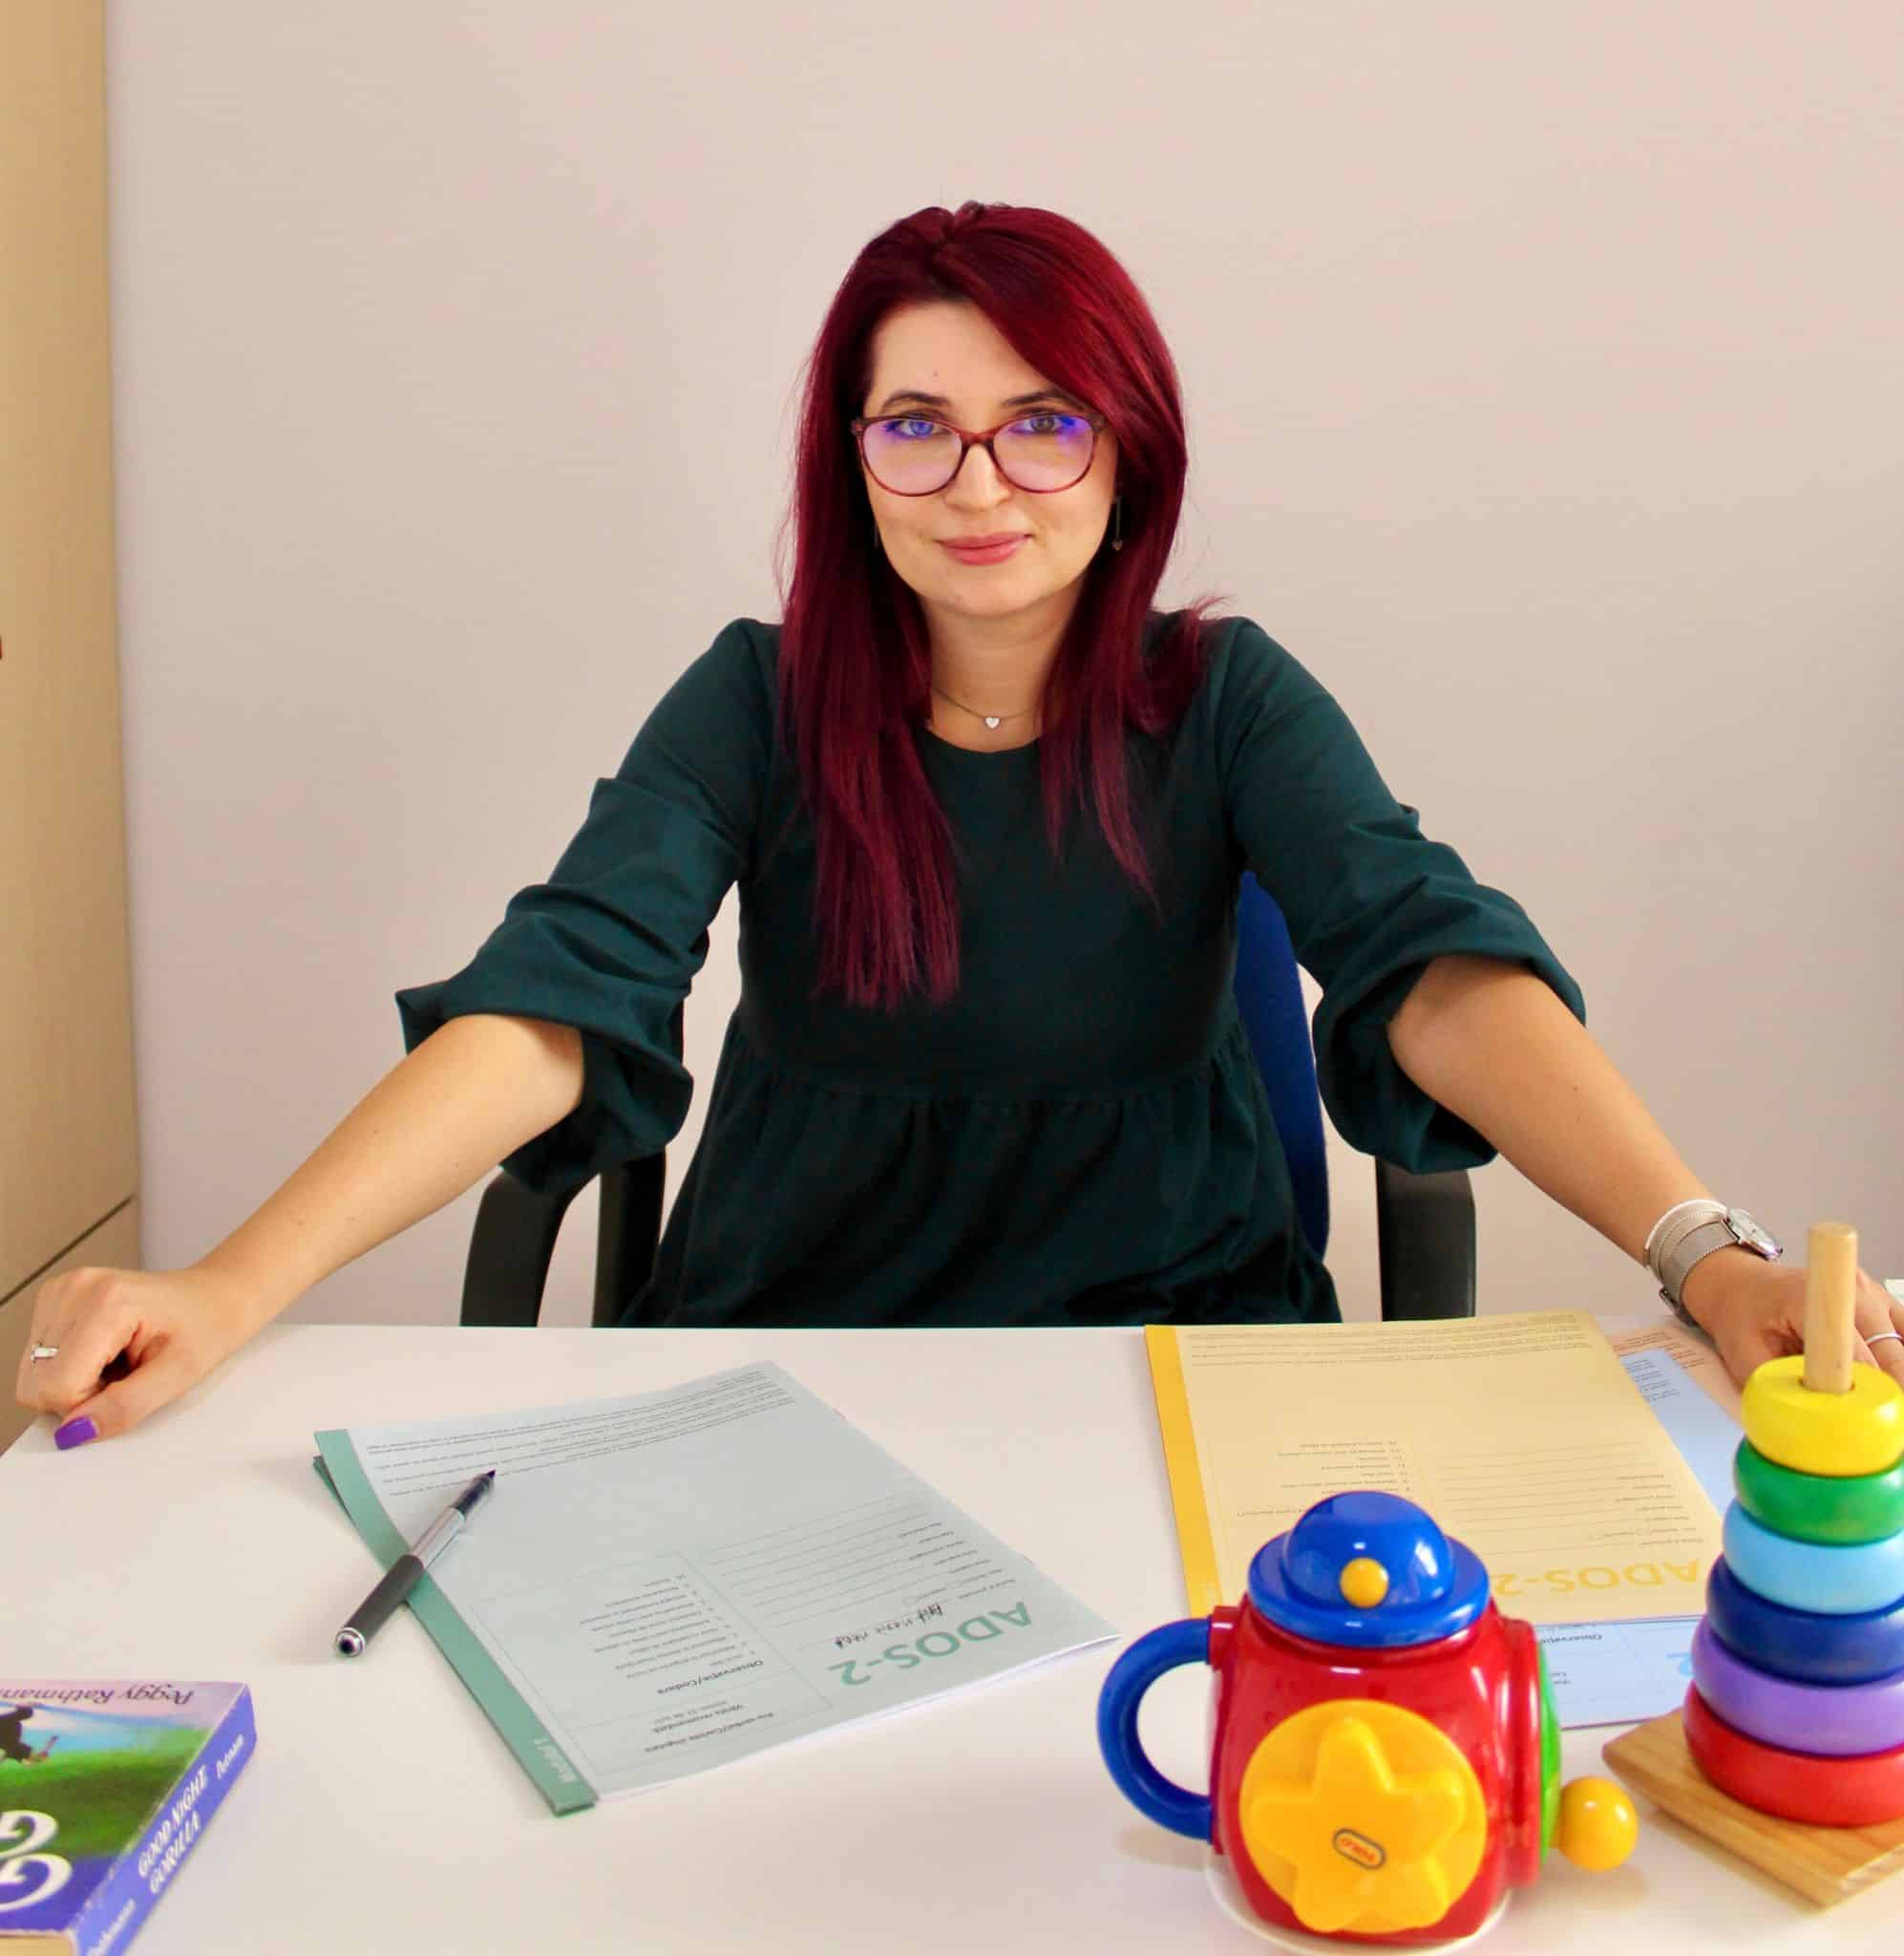 Semne ADHD la copii. Interviu cu Violeta Mihalașcu, psiholog clinician și analist comportamental | Demamici.ro